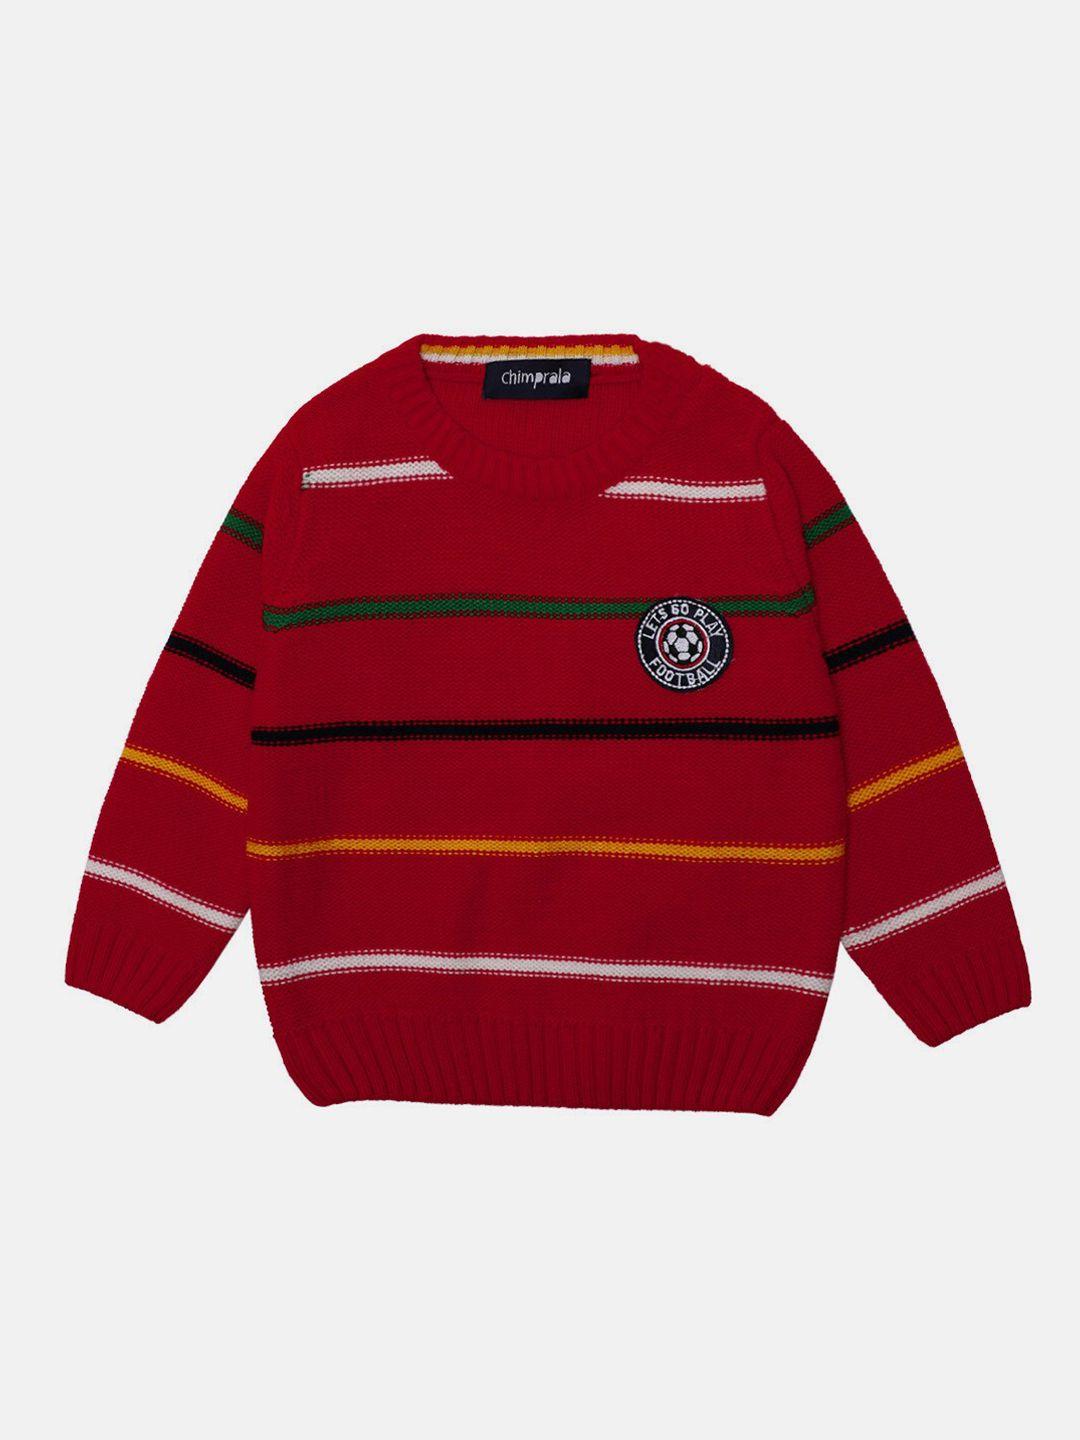 chimprala boys red & black striped woolen pullover